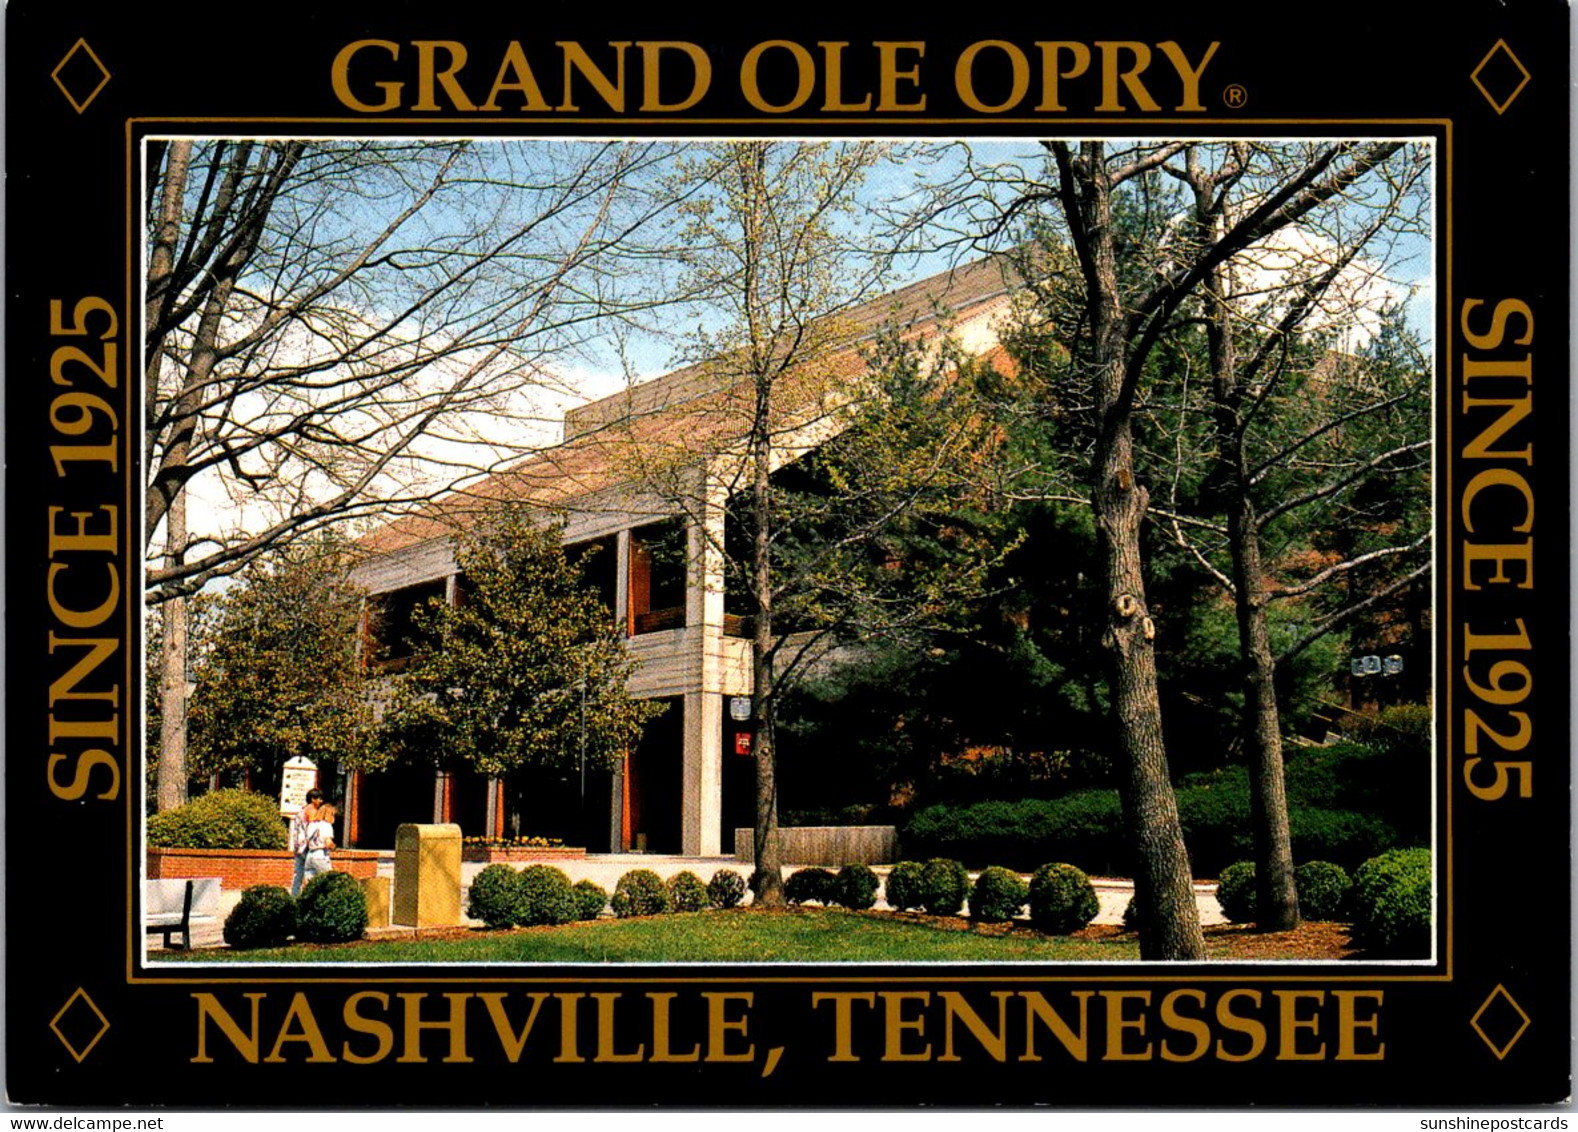 Tennessee Nashville The Grand Ole Opry - Nashville